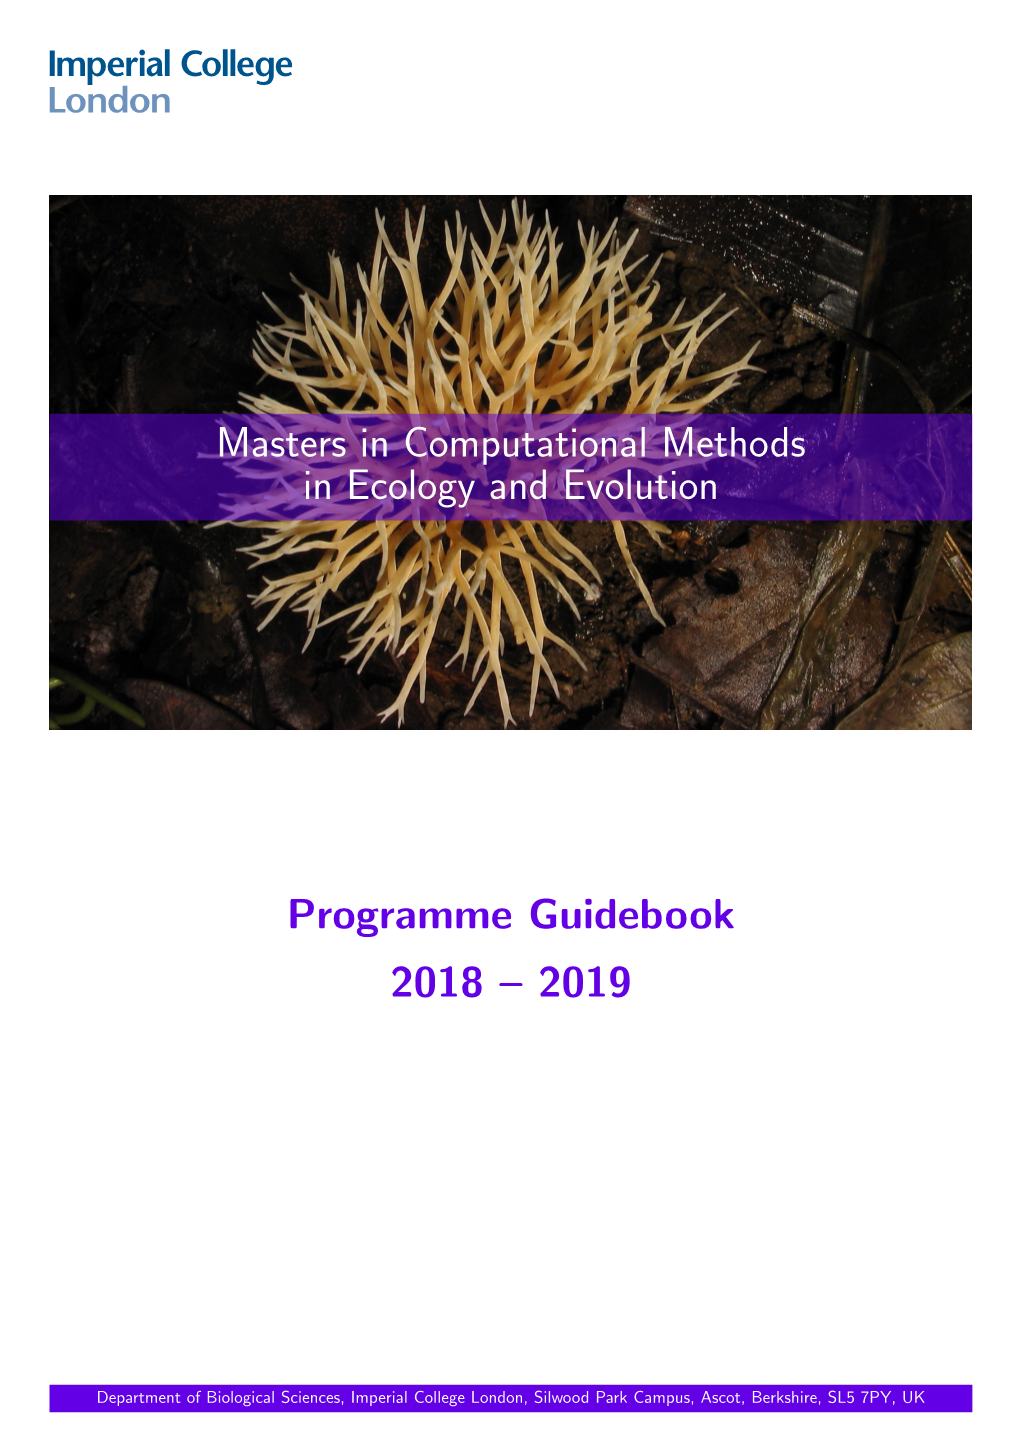 Programme Guidebook 2018 – 2019